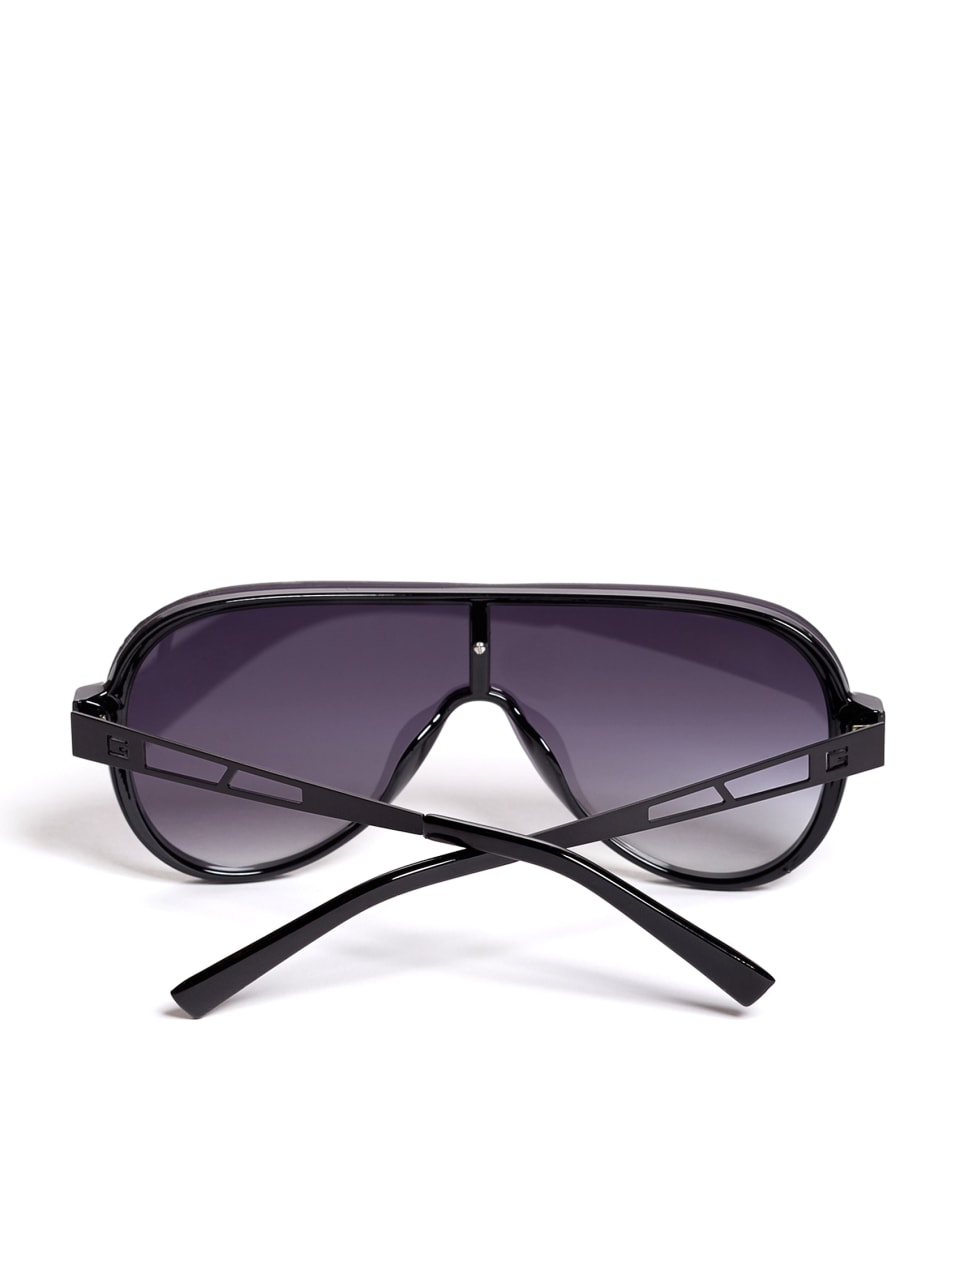 GUESS Factory Men's Future Rimless Aviator Sunglasses | eBay